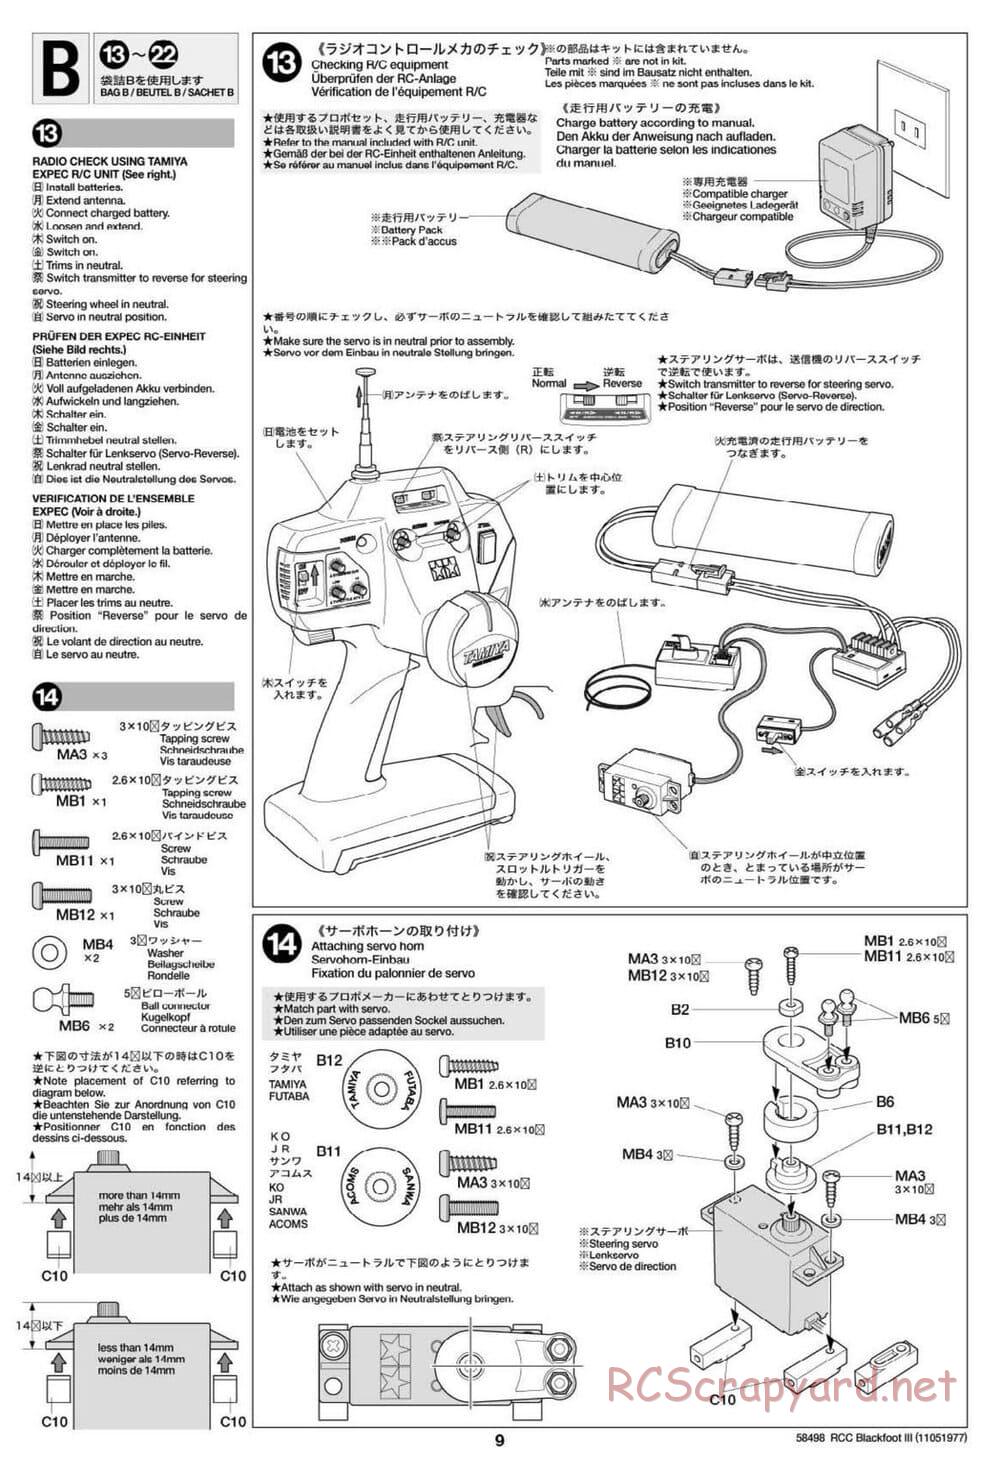 Tamiya - Blackfoot III - WT-01 Chassis - Manual - Page 9